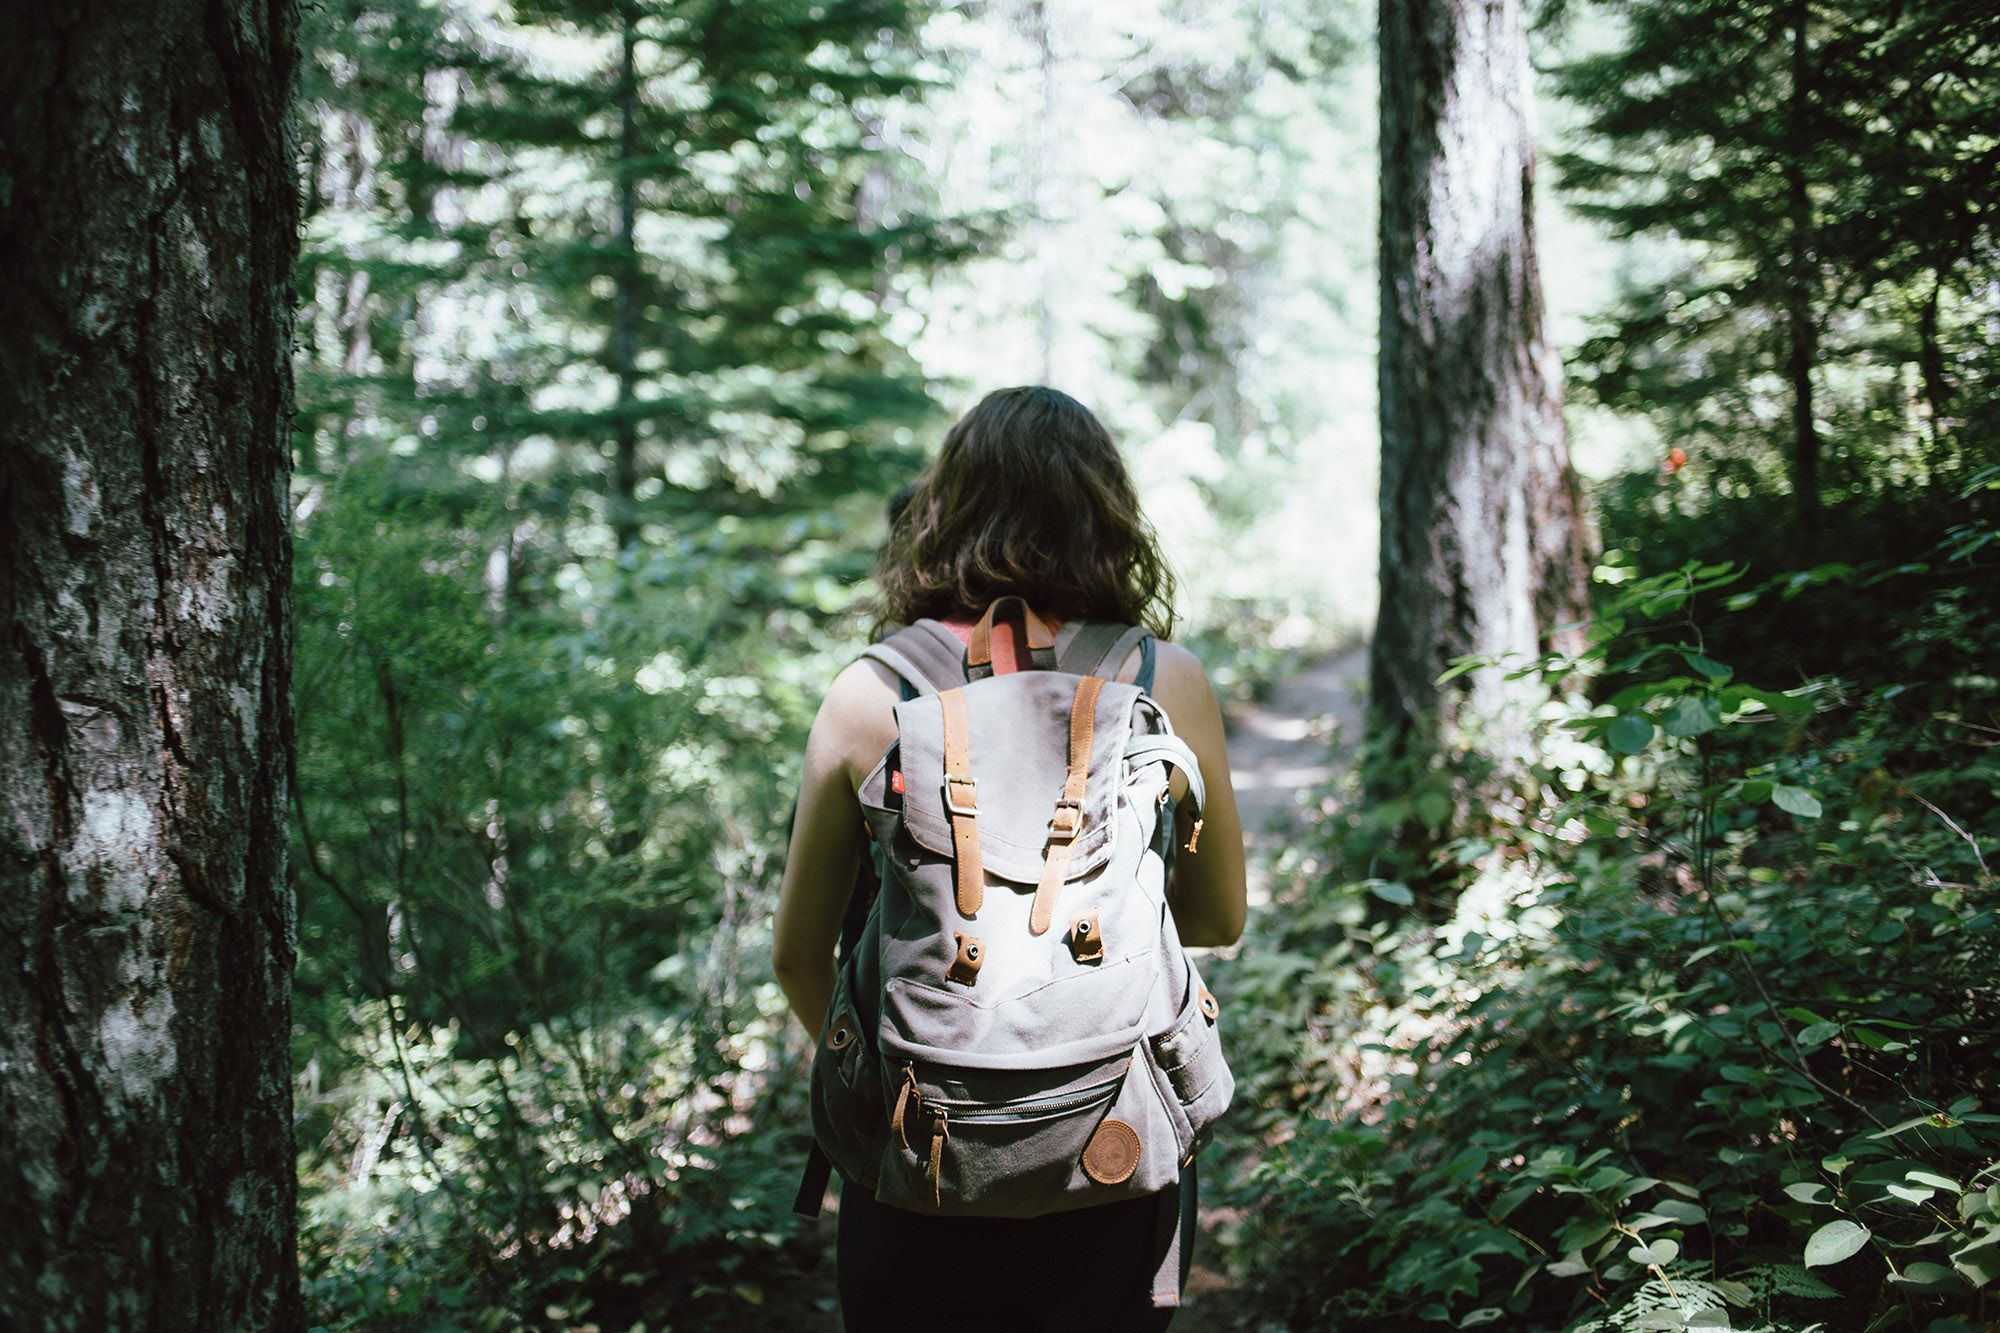 hiking trails near everett wa | hiking while high | hiking in everett wa | cannabis and exercise | hiking and cannabis consumption | why is hiking fun